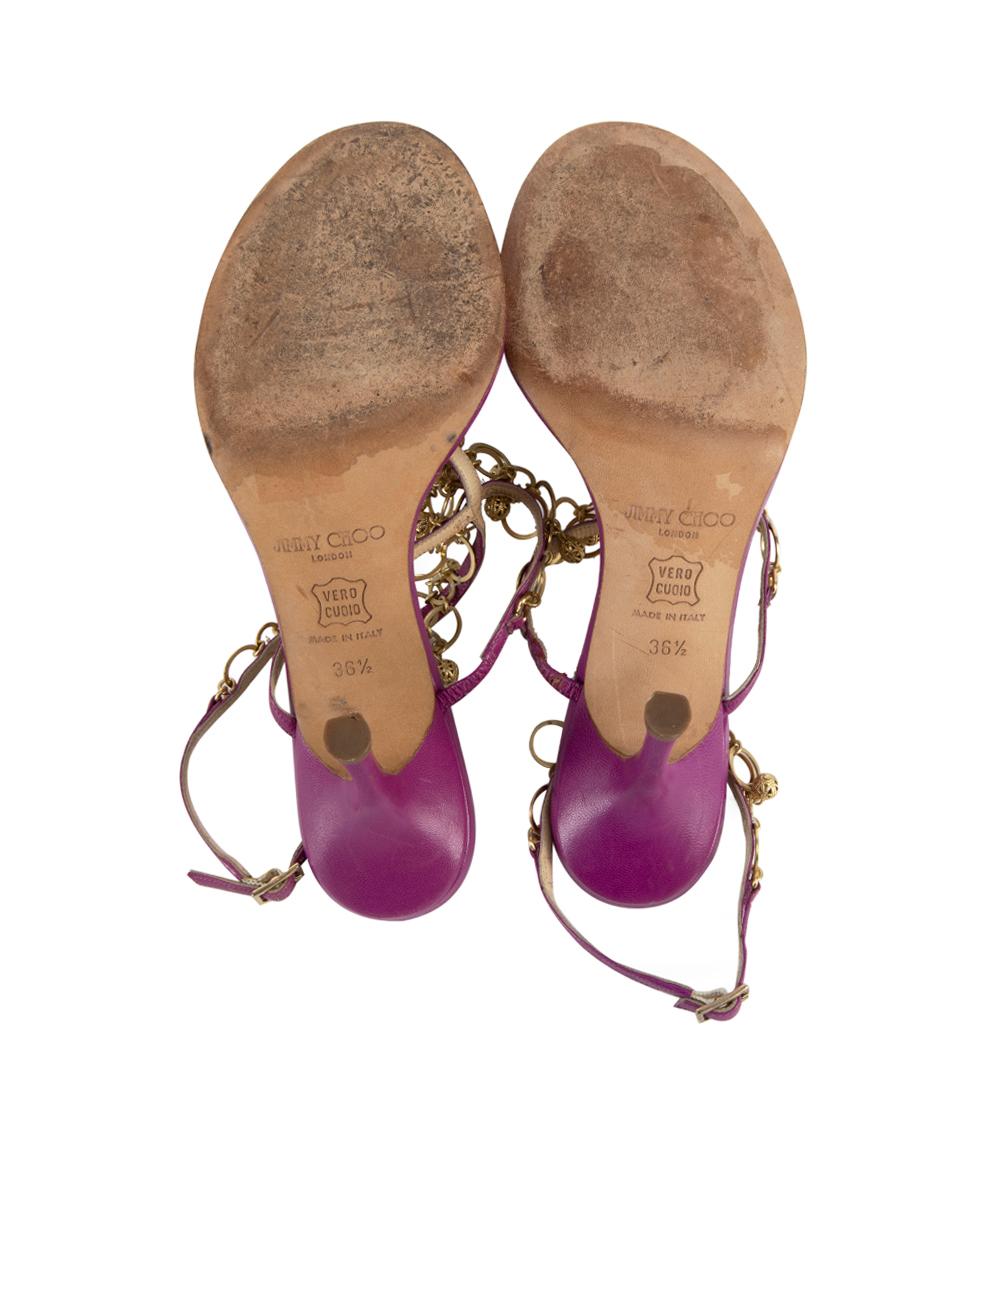 Pre-Loved Jimmy Choo Women's Purple Leather Charm Accent Sandal Heel 1